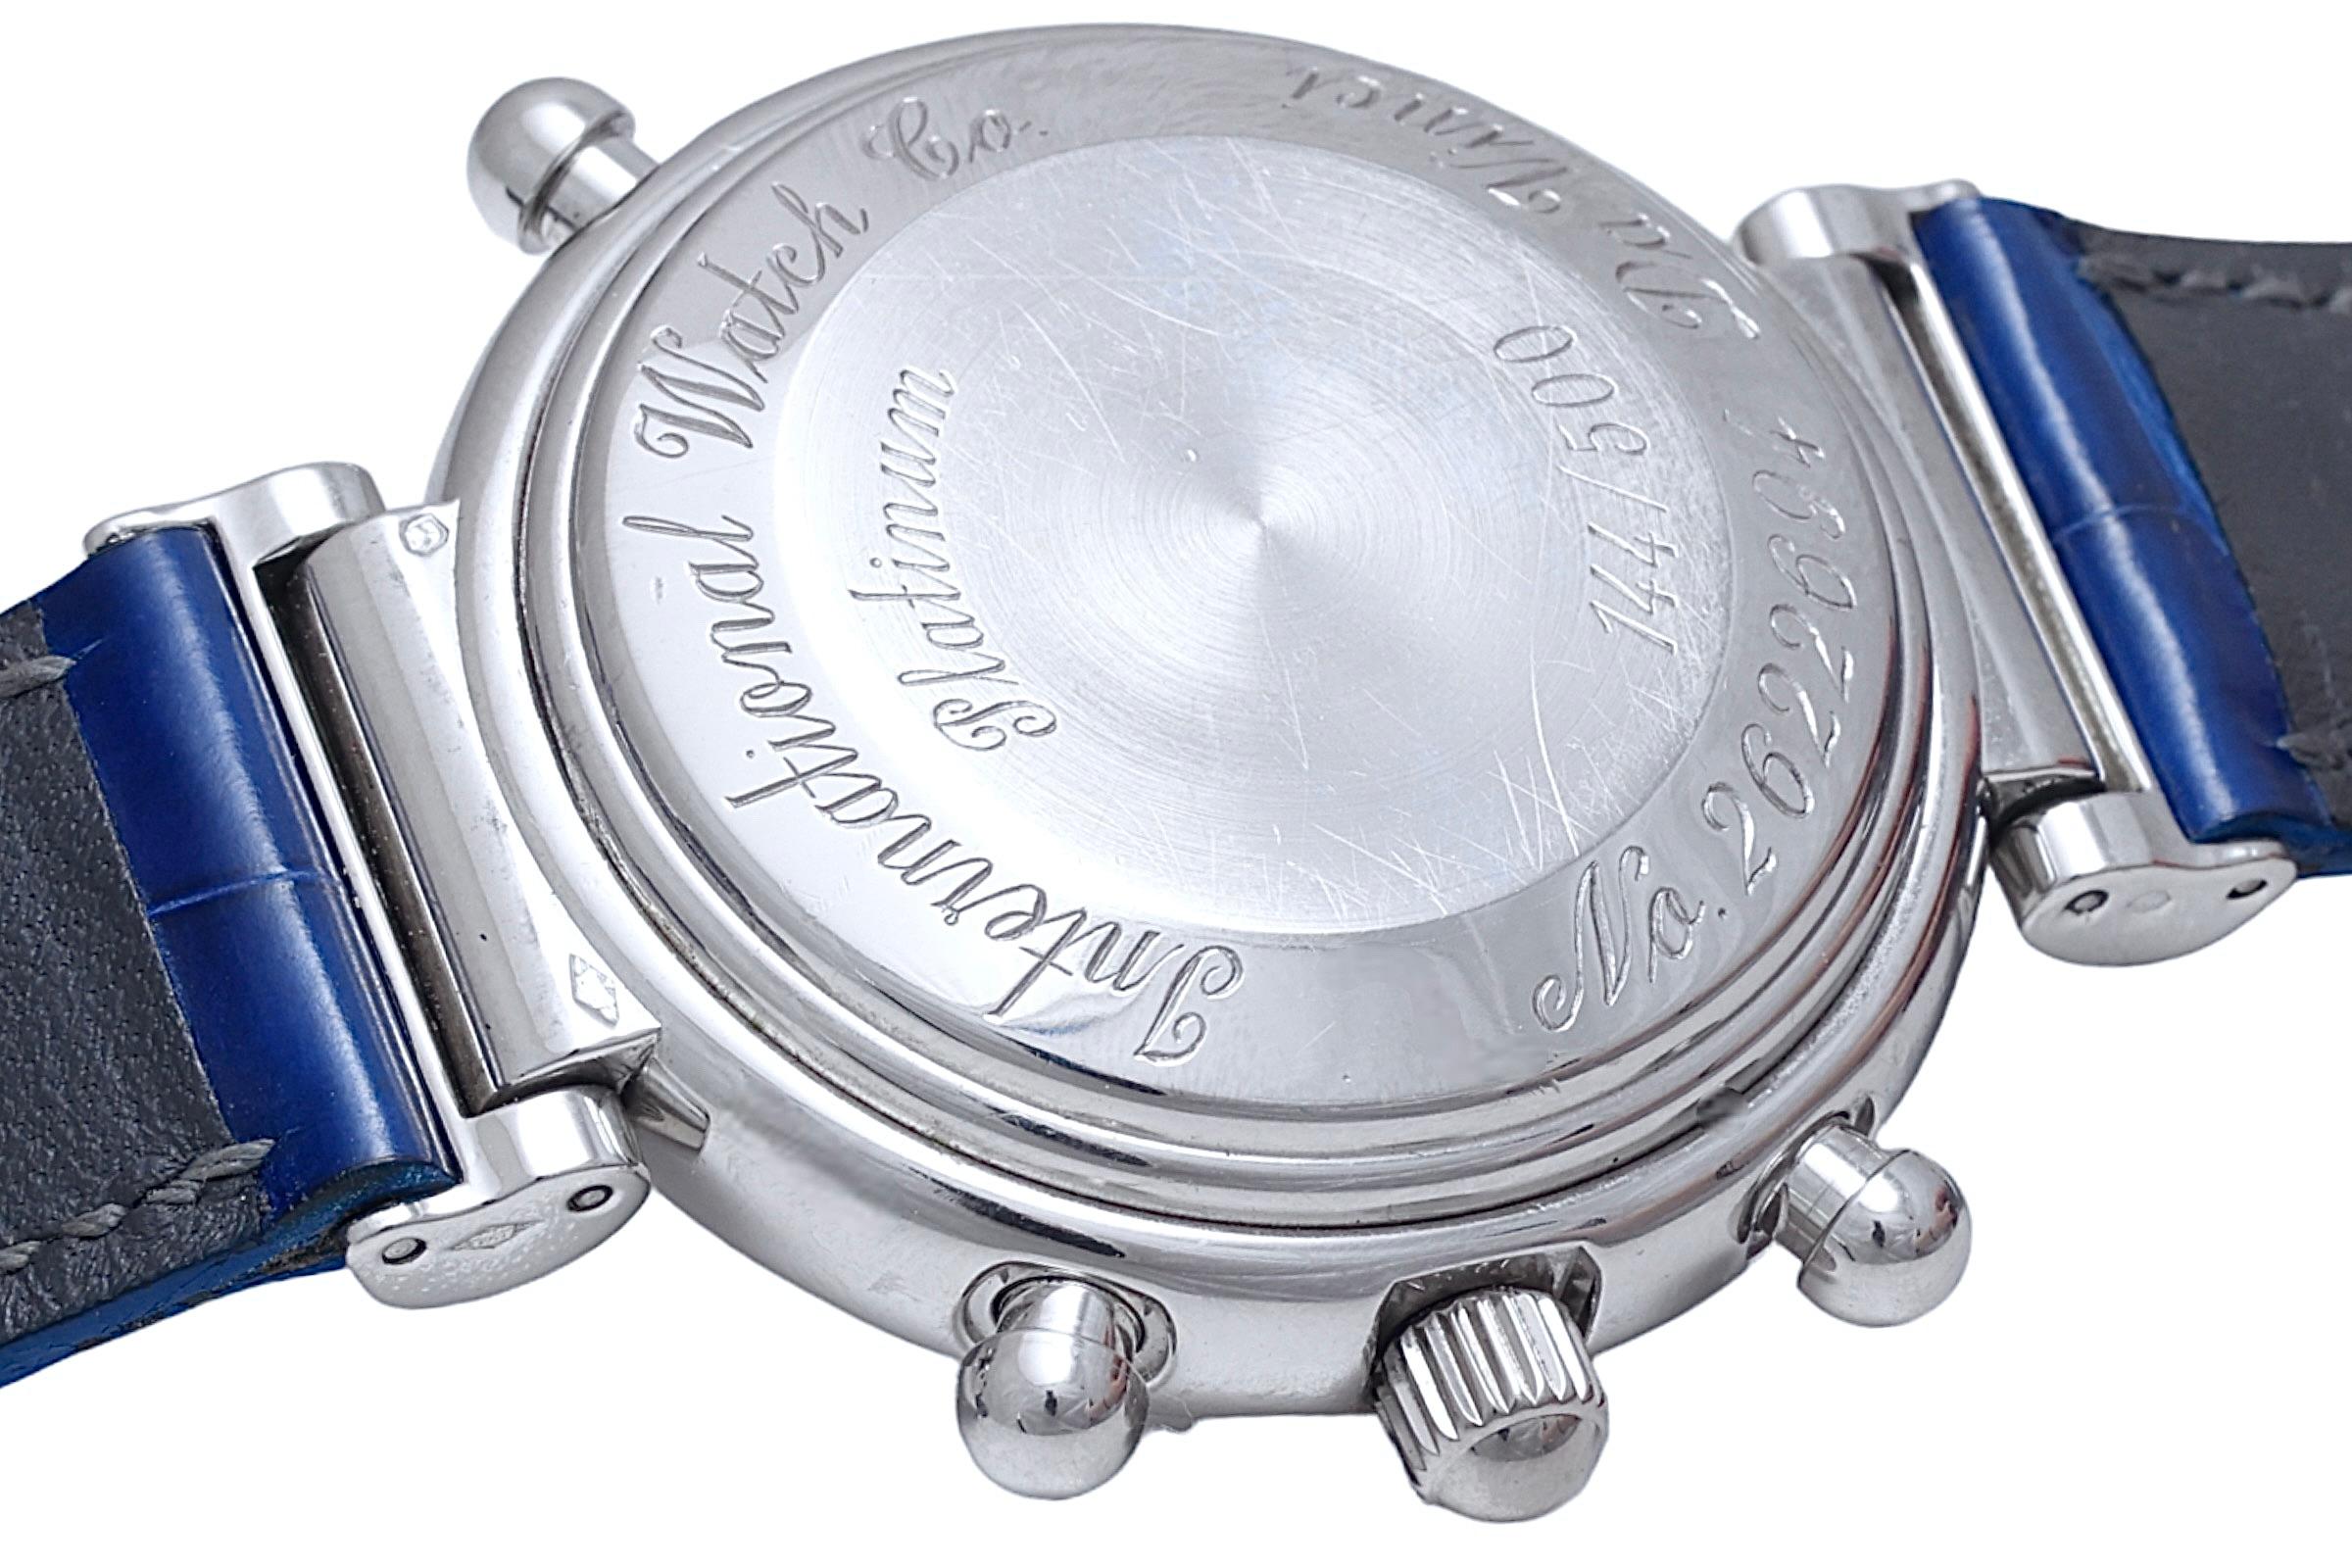 Platinum IWC Perpetual Calendar Split Second Chronograph Limited Wrist Watch3751 For Sale 6